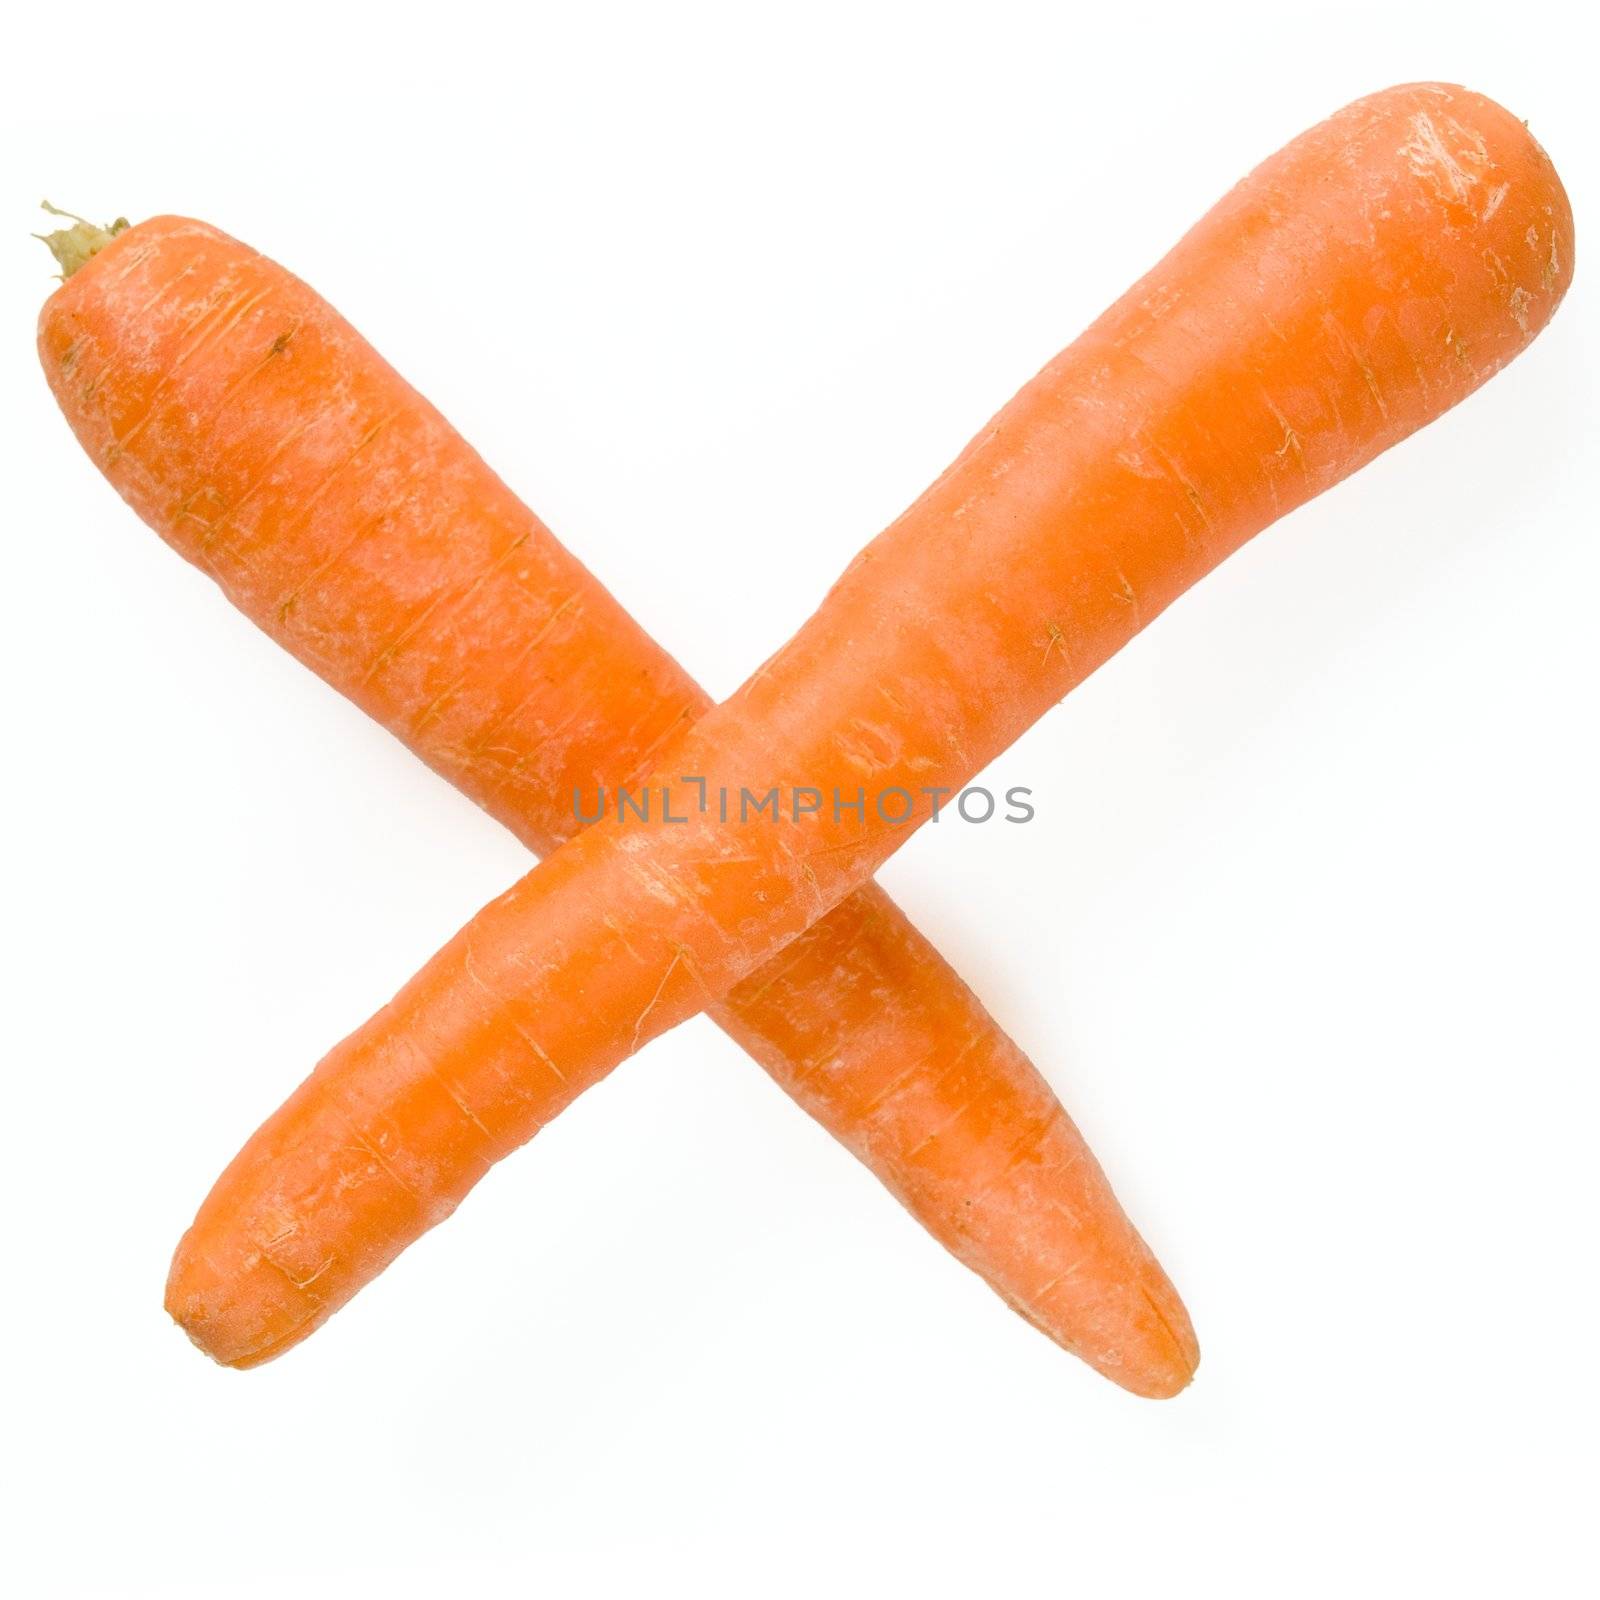 plus or multiplication sign. fresh orange carrot on a white background